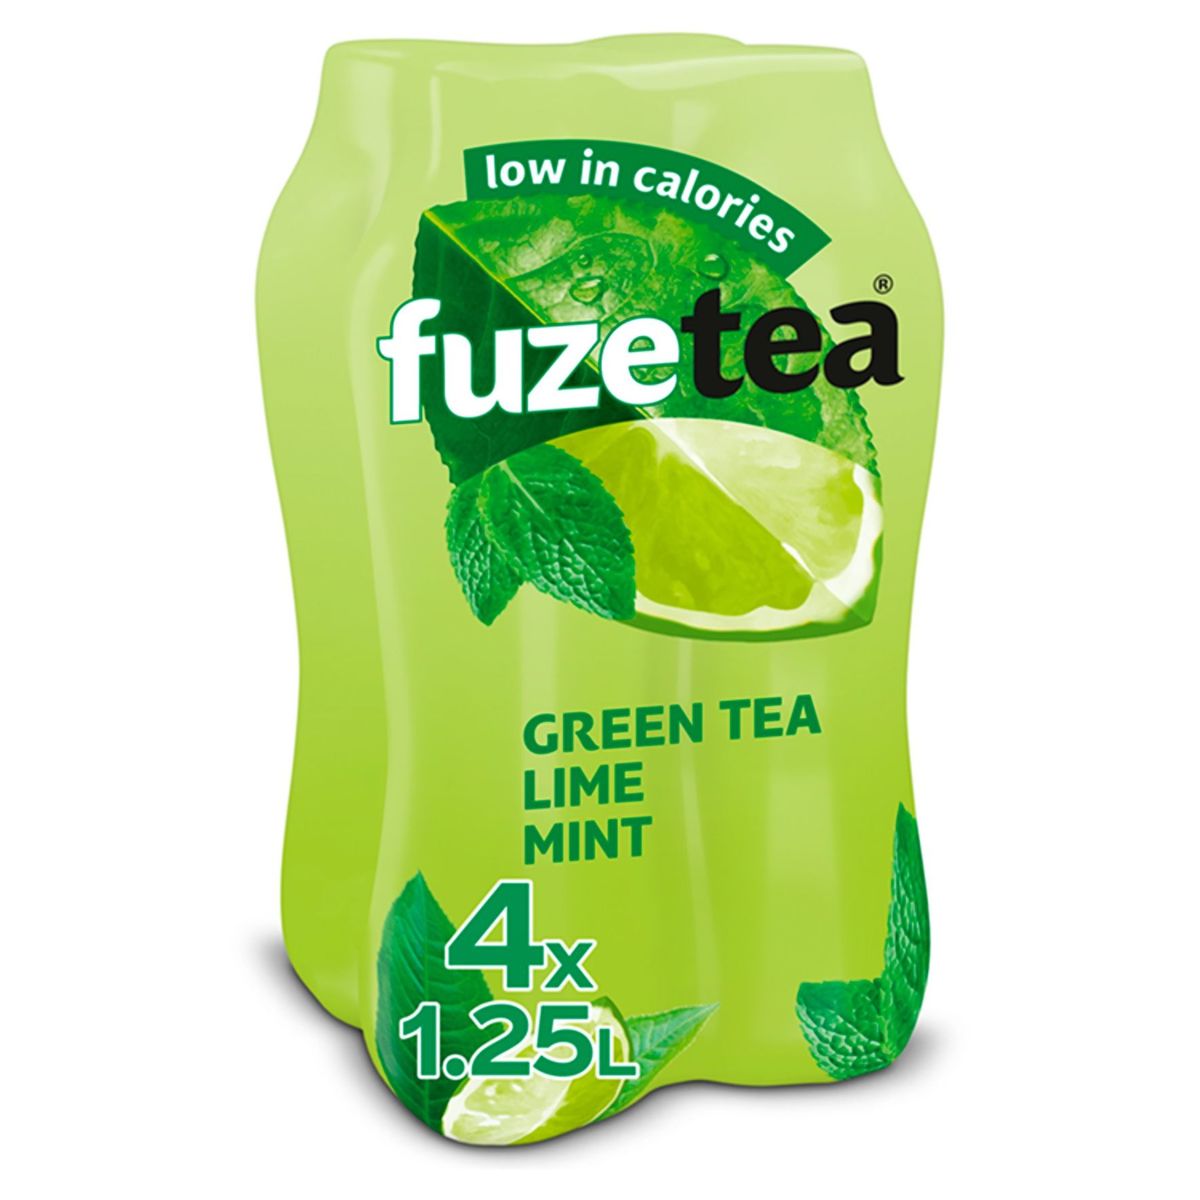 Fuze Tea Green Tea Lime Mint Iced Tea 4 x 1.25 L